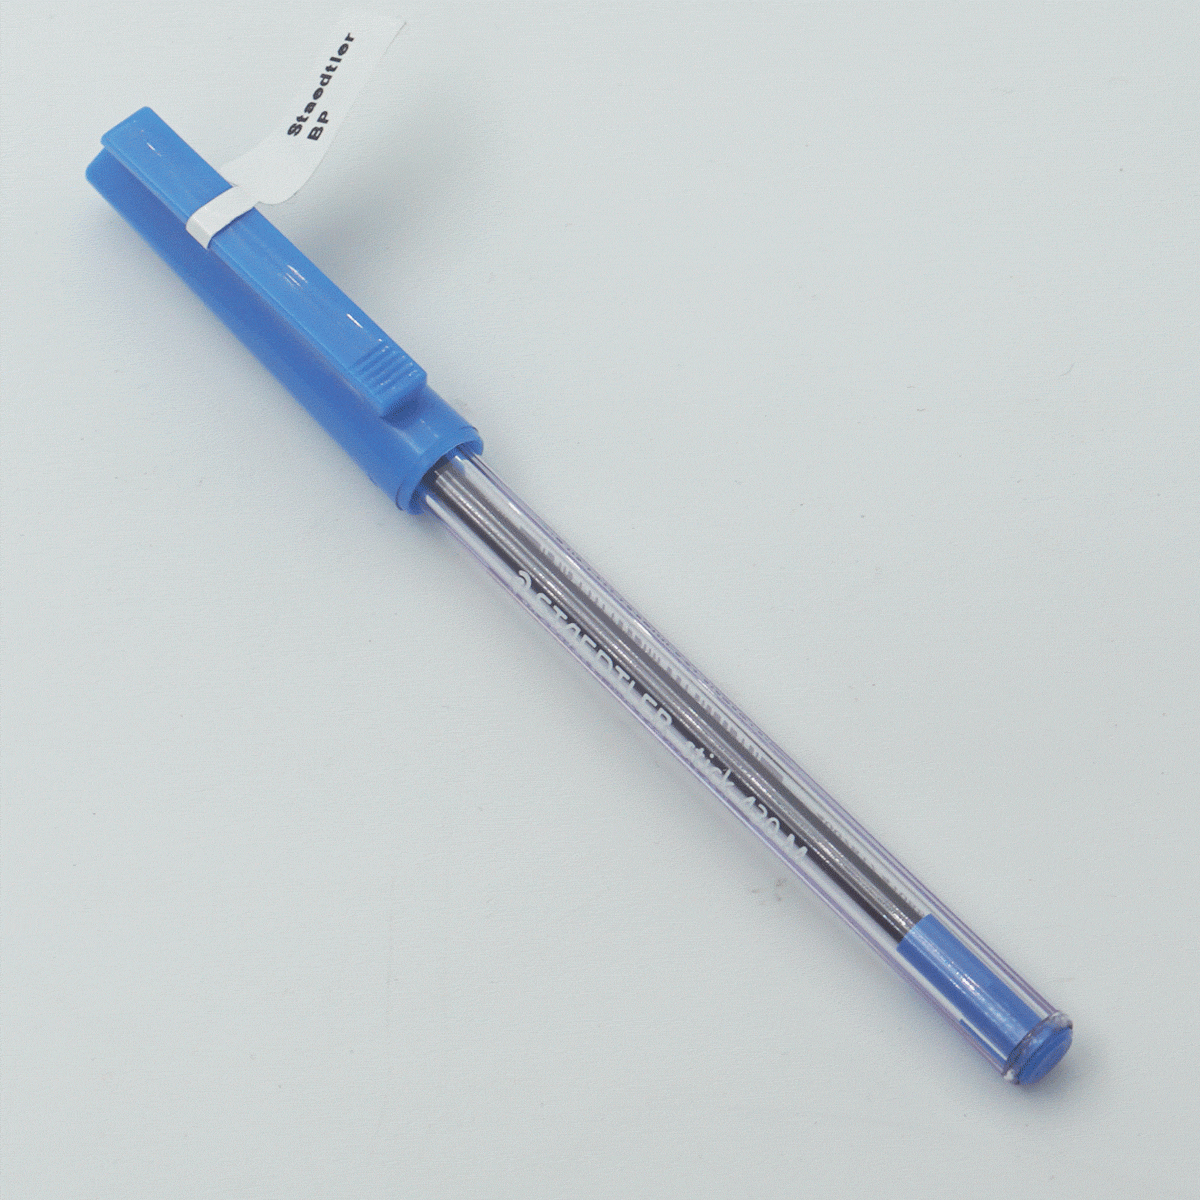 Staedtler 430 M-9 Transparent Body With Blue Color Clip Blue writing Medium Tip Cap Type Ball Pen SKU 24397